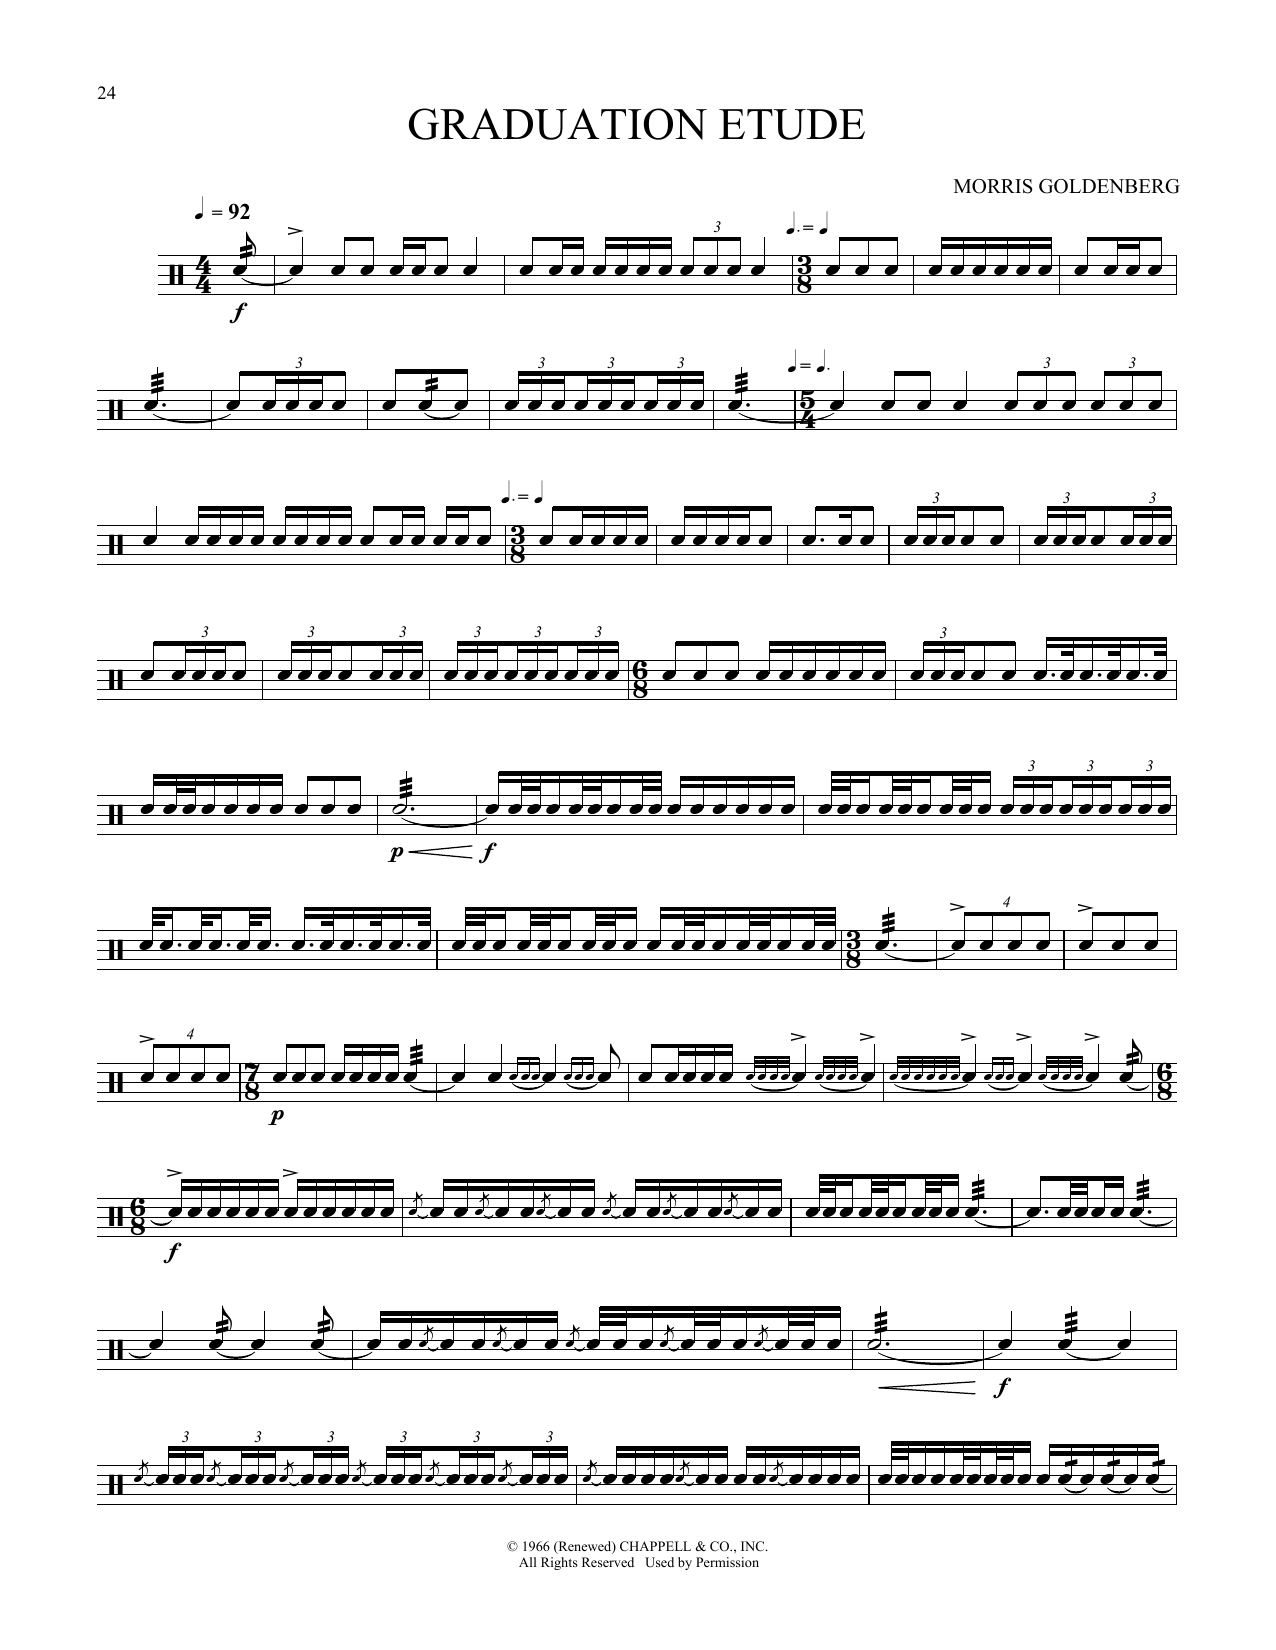 Morris Goldenberg Graduation Etude Sheet Music Notes & Chords for Snare Drum Solo - Download or Print PDF